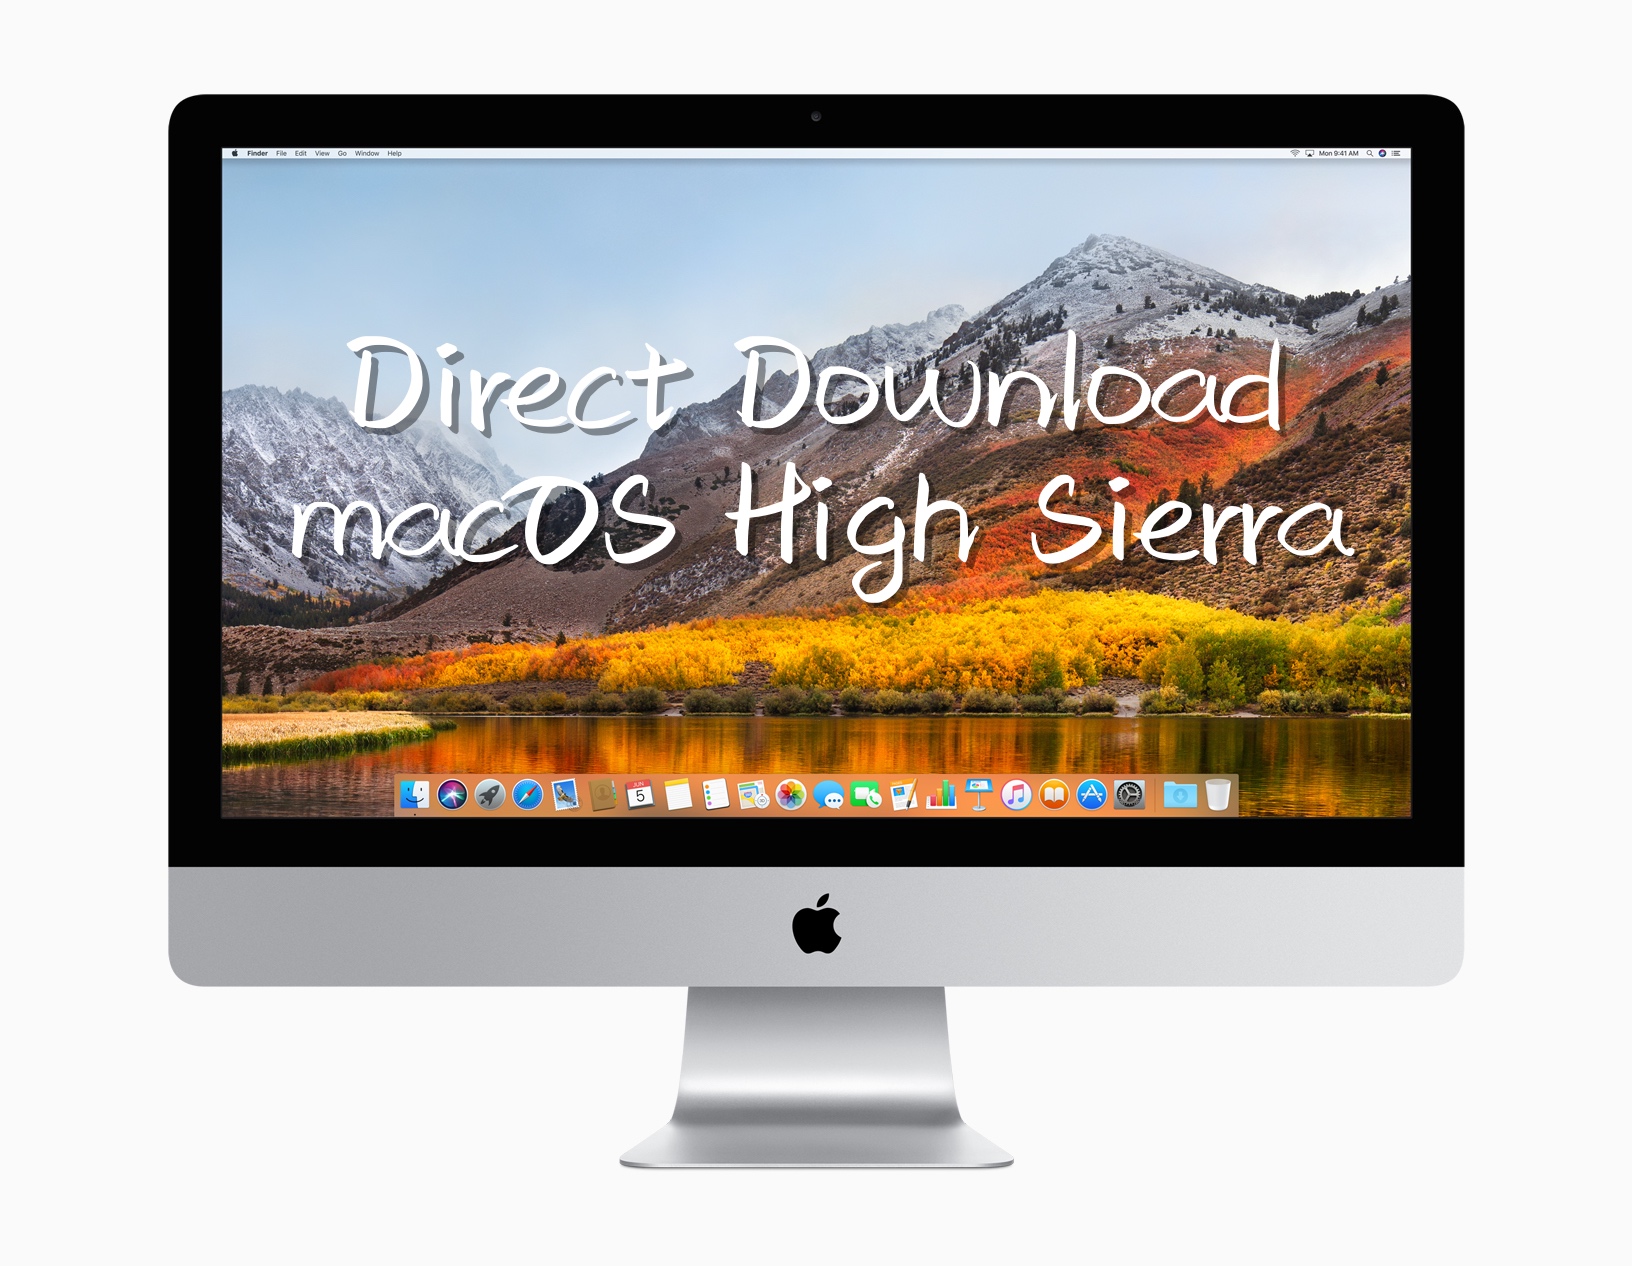 Download High Sierra Mac Os